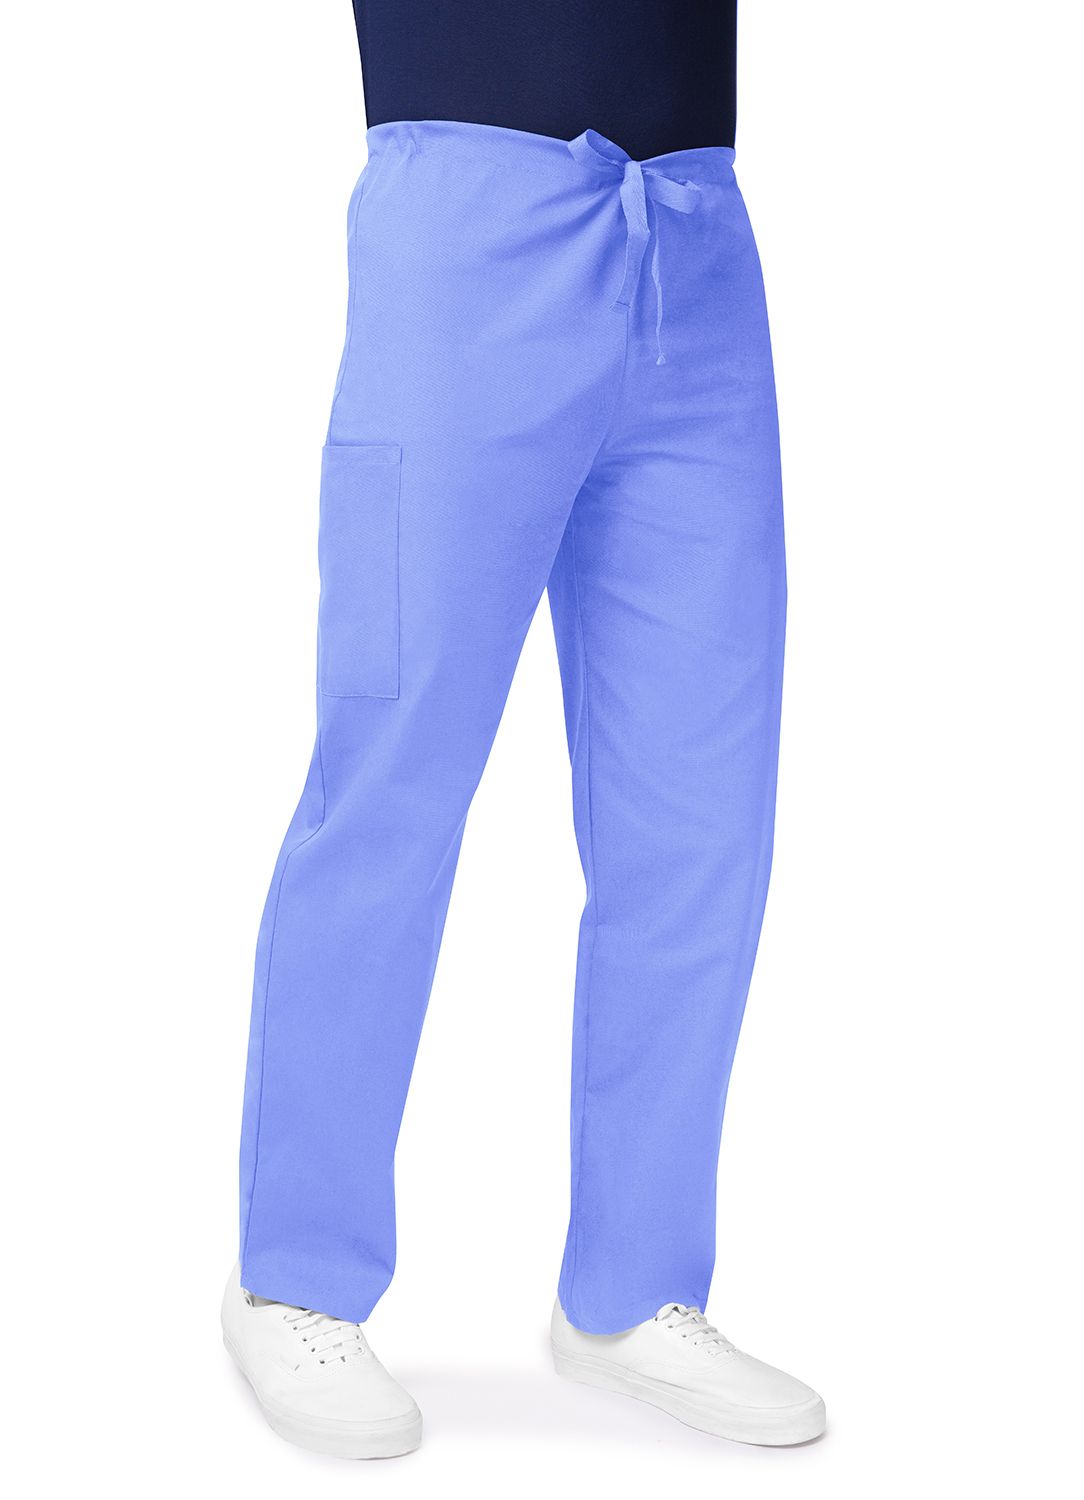 Unisex Drawstring Pants by Adar XS-5X / Ceil Blue